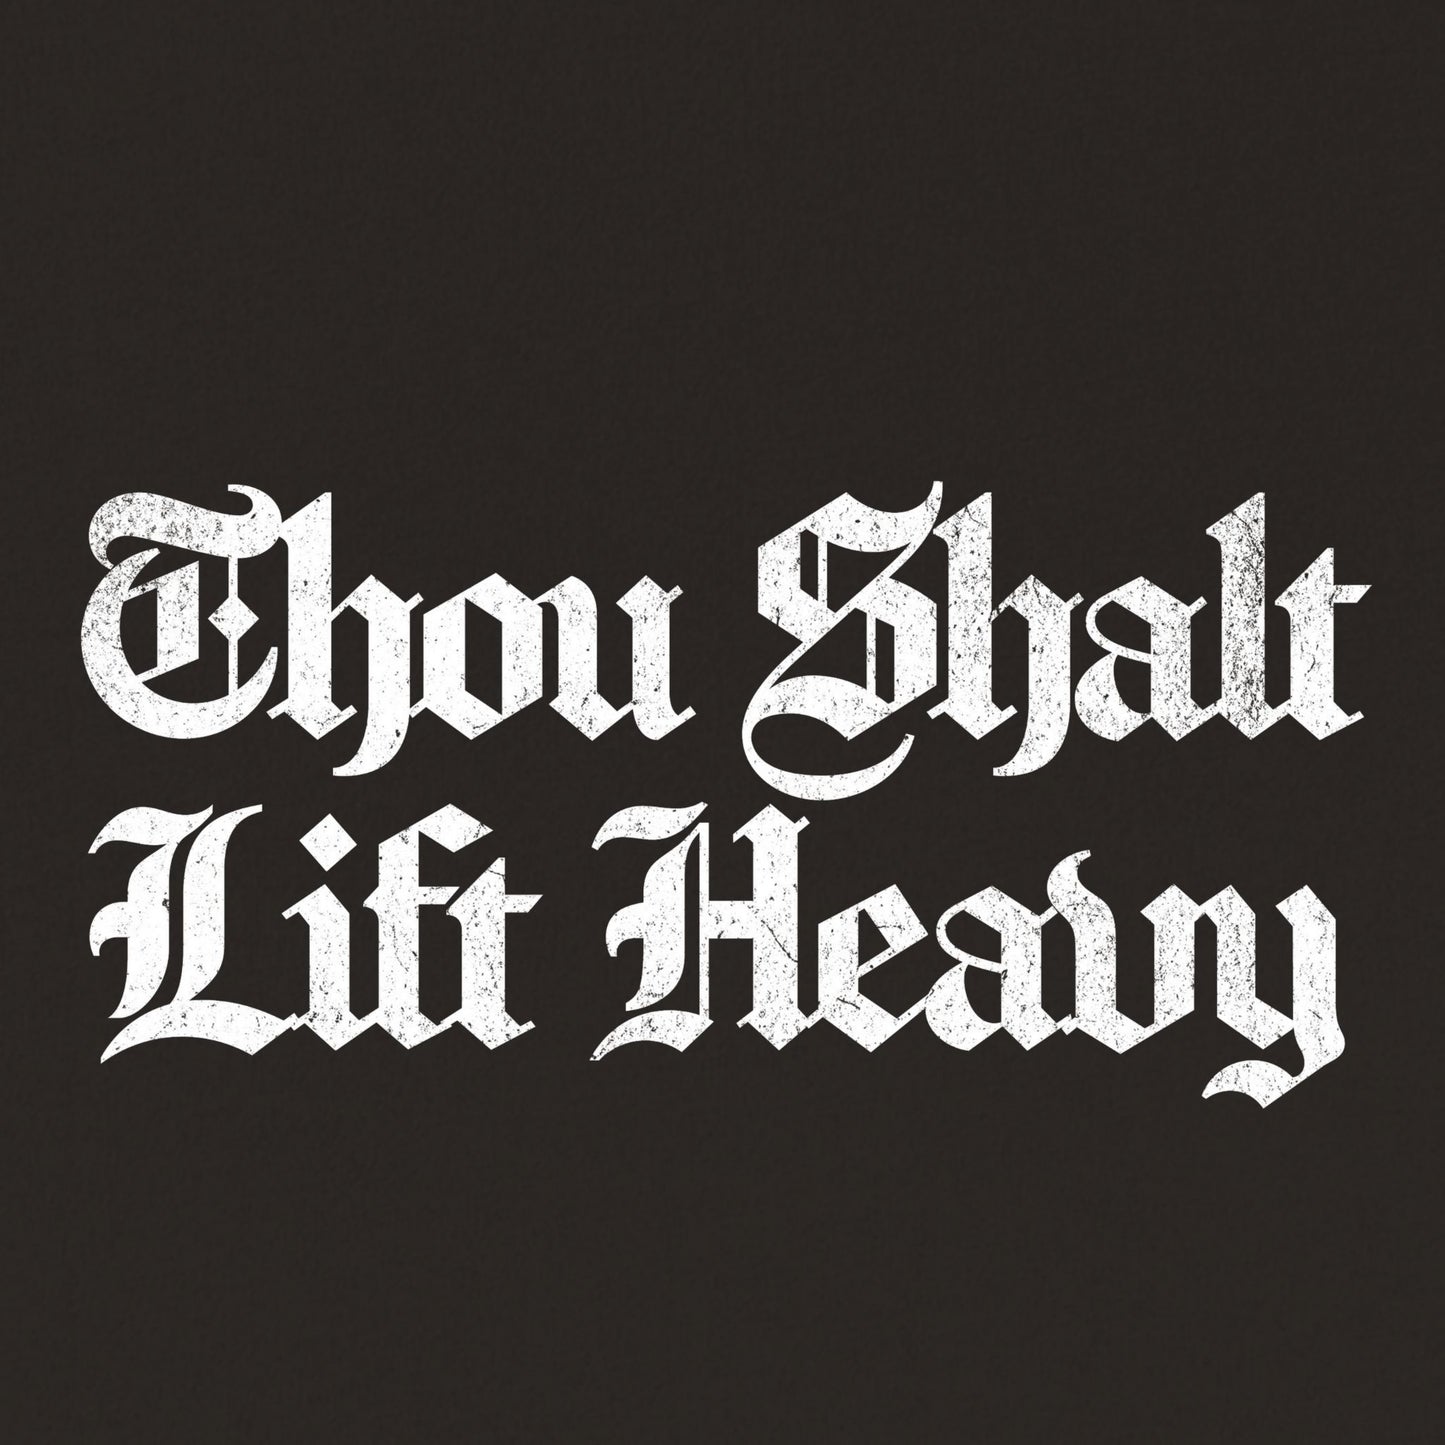 Thou Shalt Lift Heavy T-Shirt